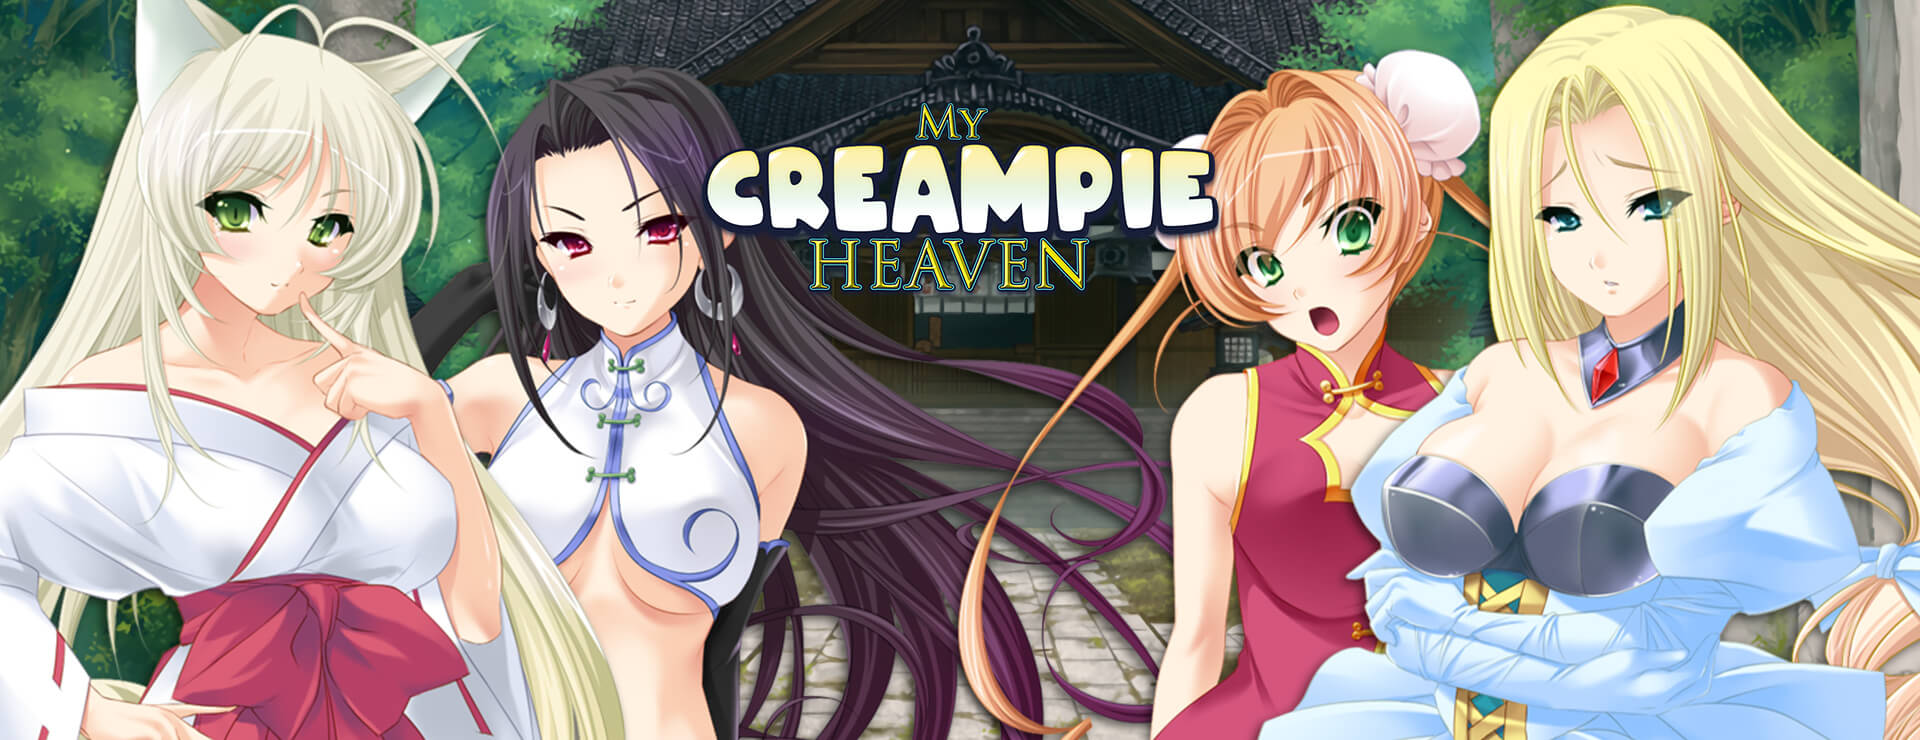 My Creampie Heaven - Japanisches Adventure Spiel